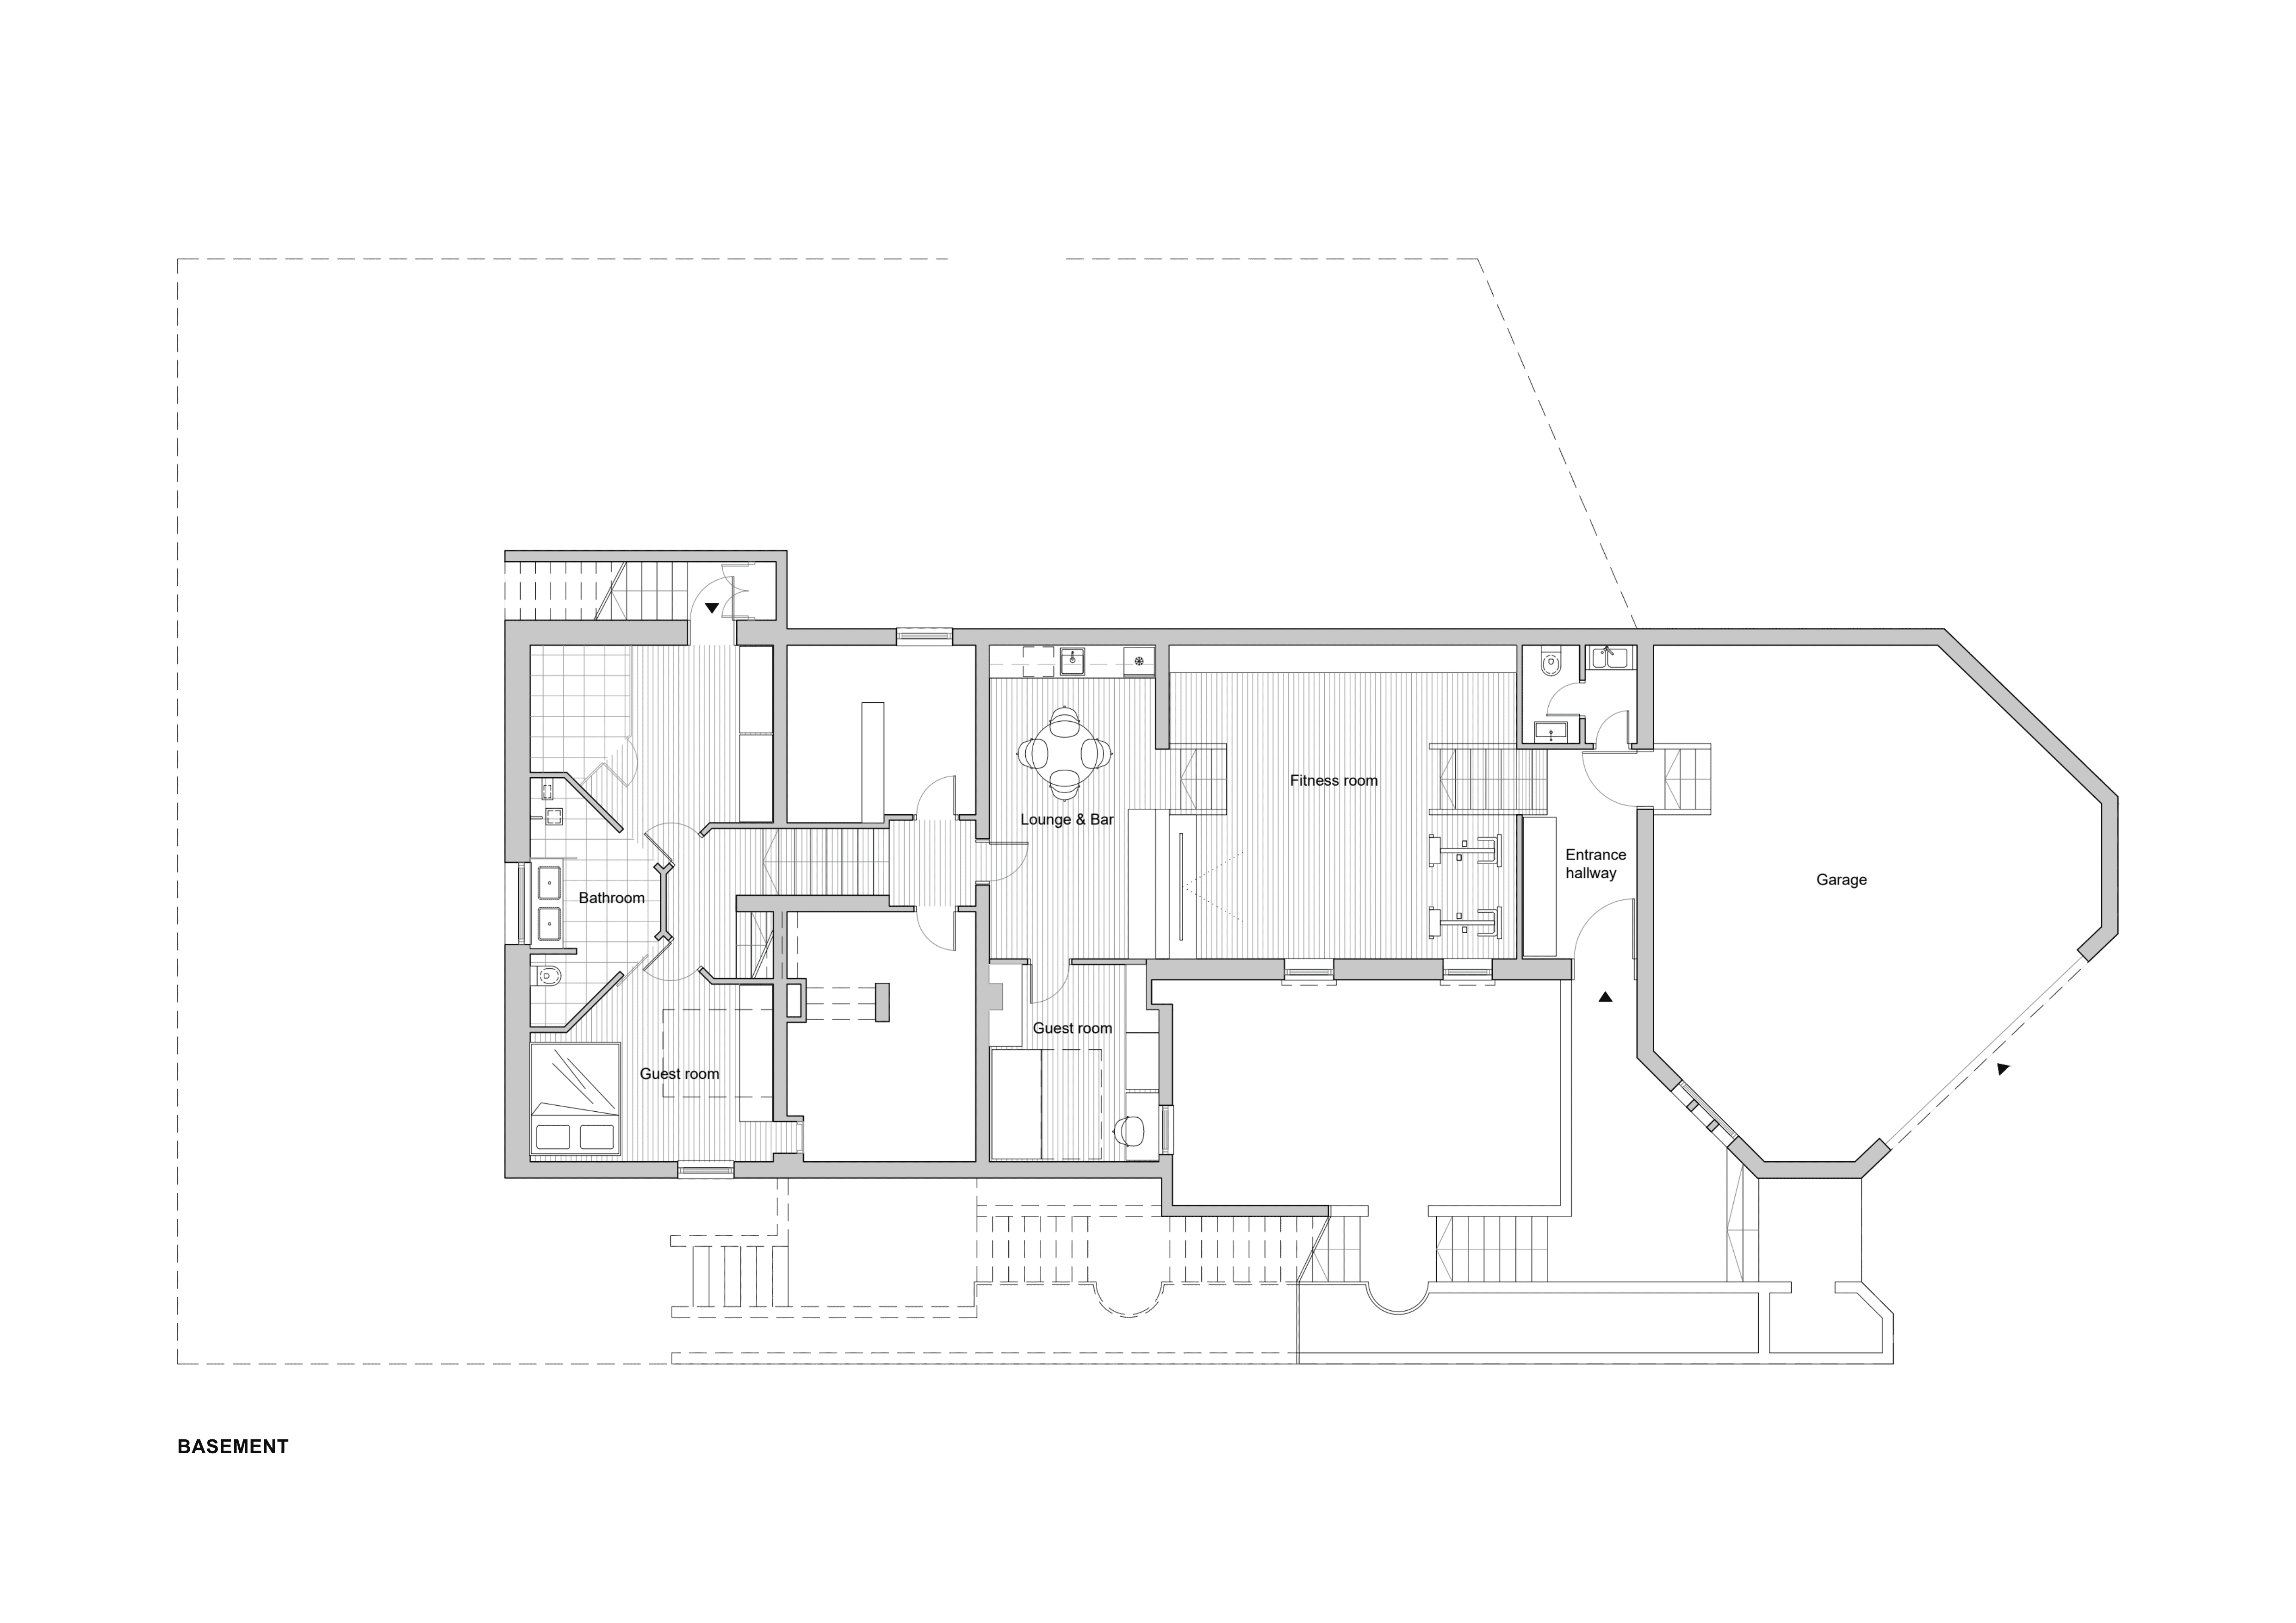 tjkl-family-house-remodel-basement